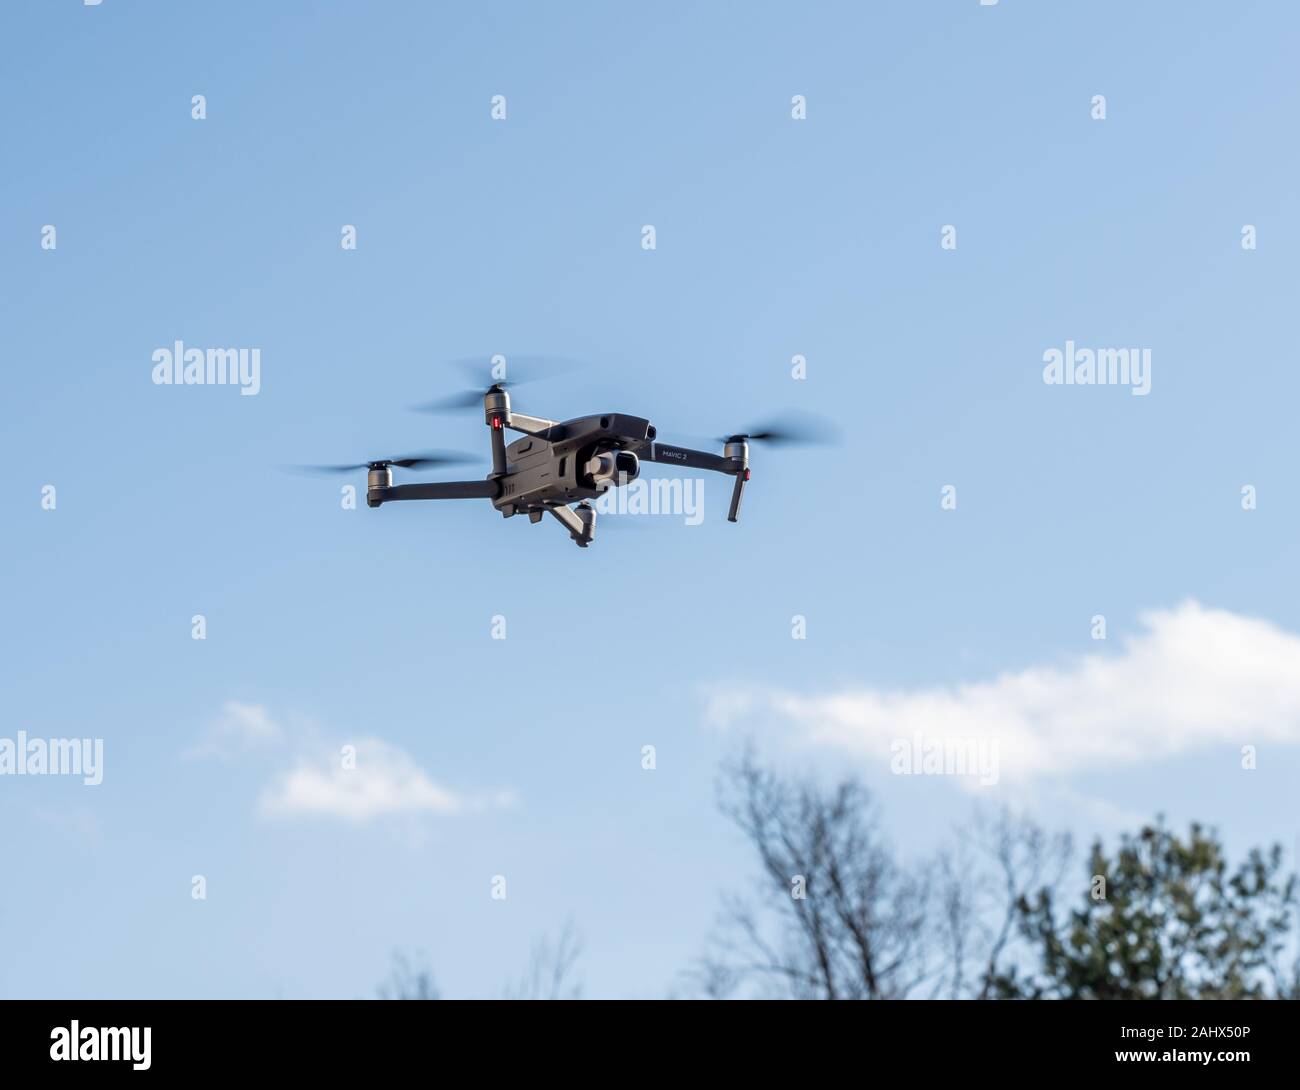 Morgantown, WV - 1 January 2020: DJI Mavic 2 Pro quadcopter or drone hovering in bright blue sky Stock Photo